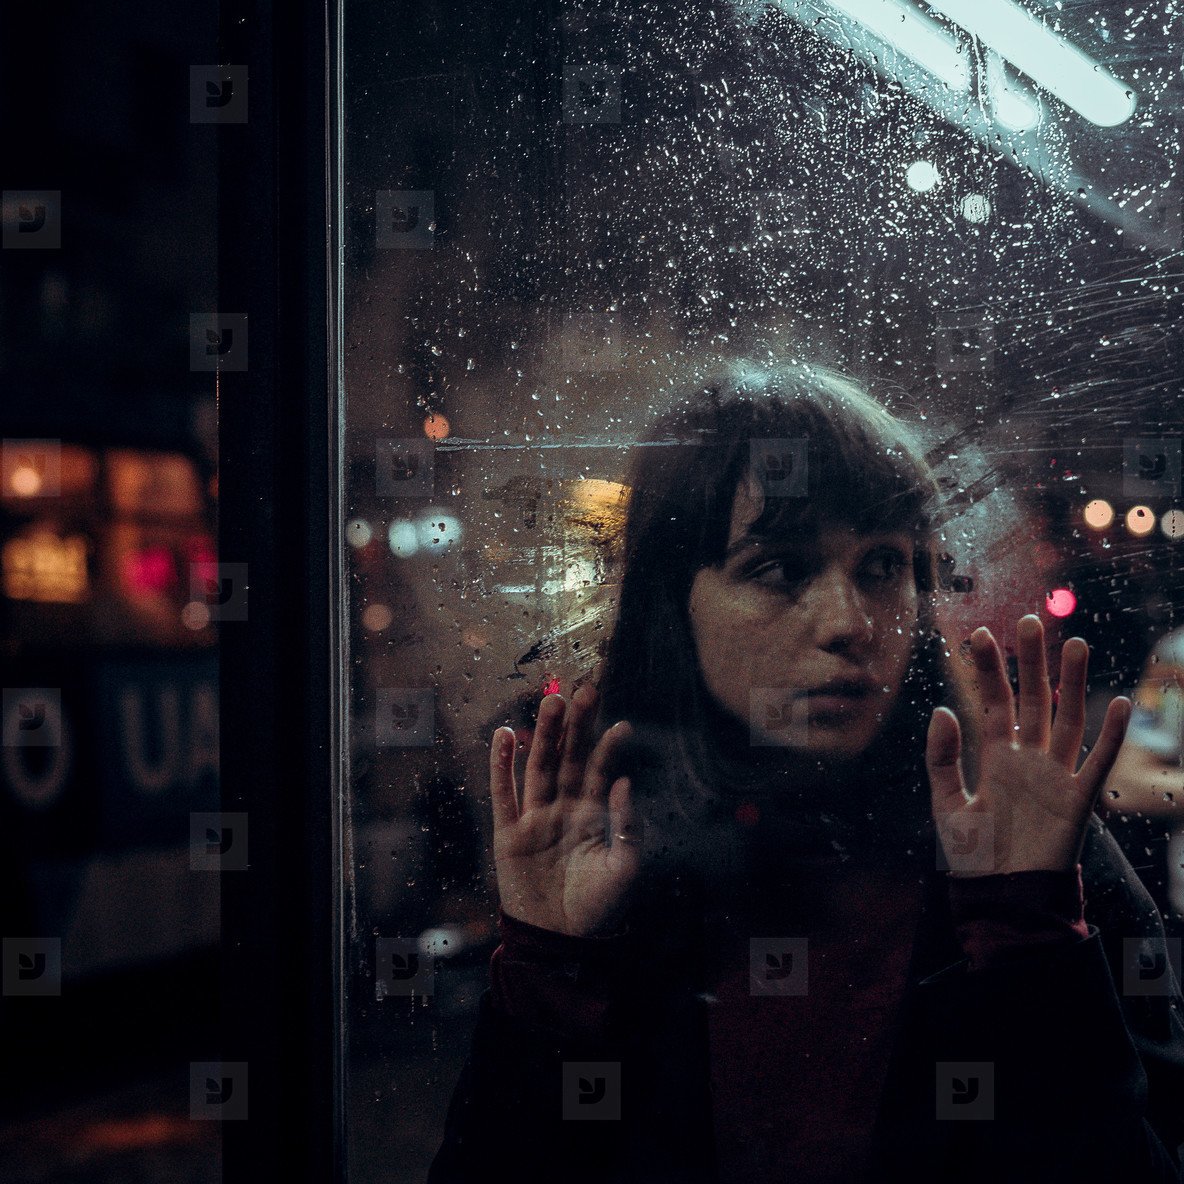 sad girl behind rain glass on night city background stock photo (172072) -  YouWorkForThem